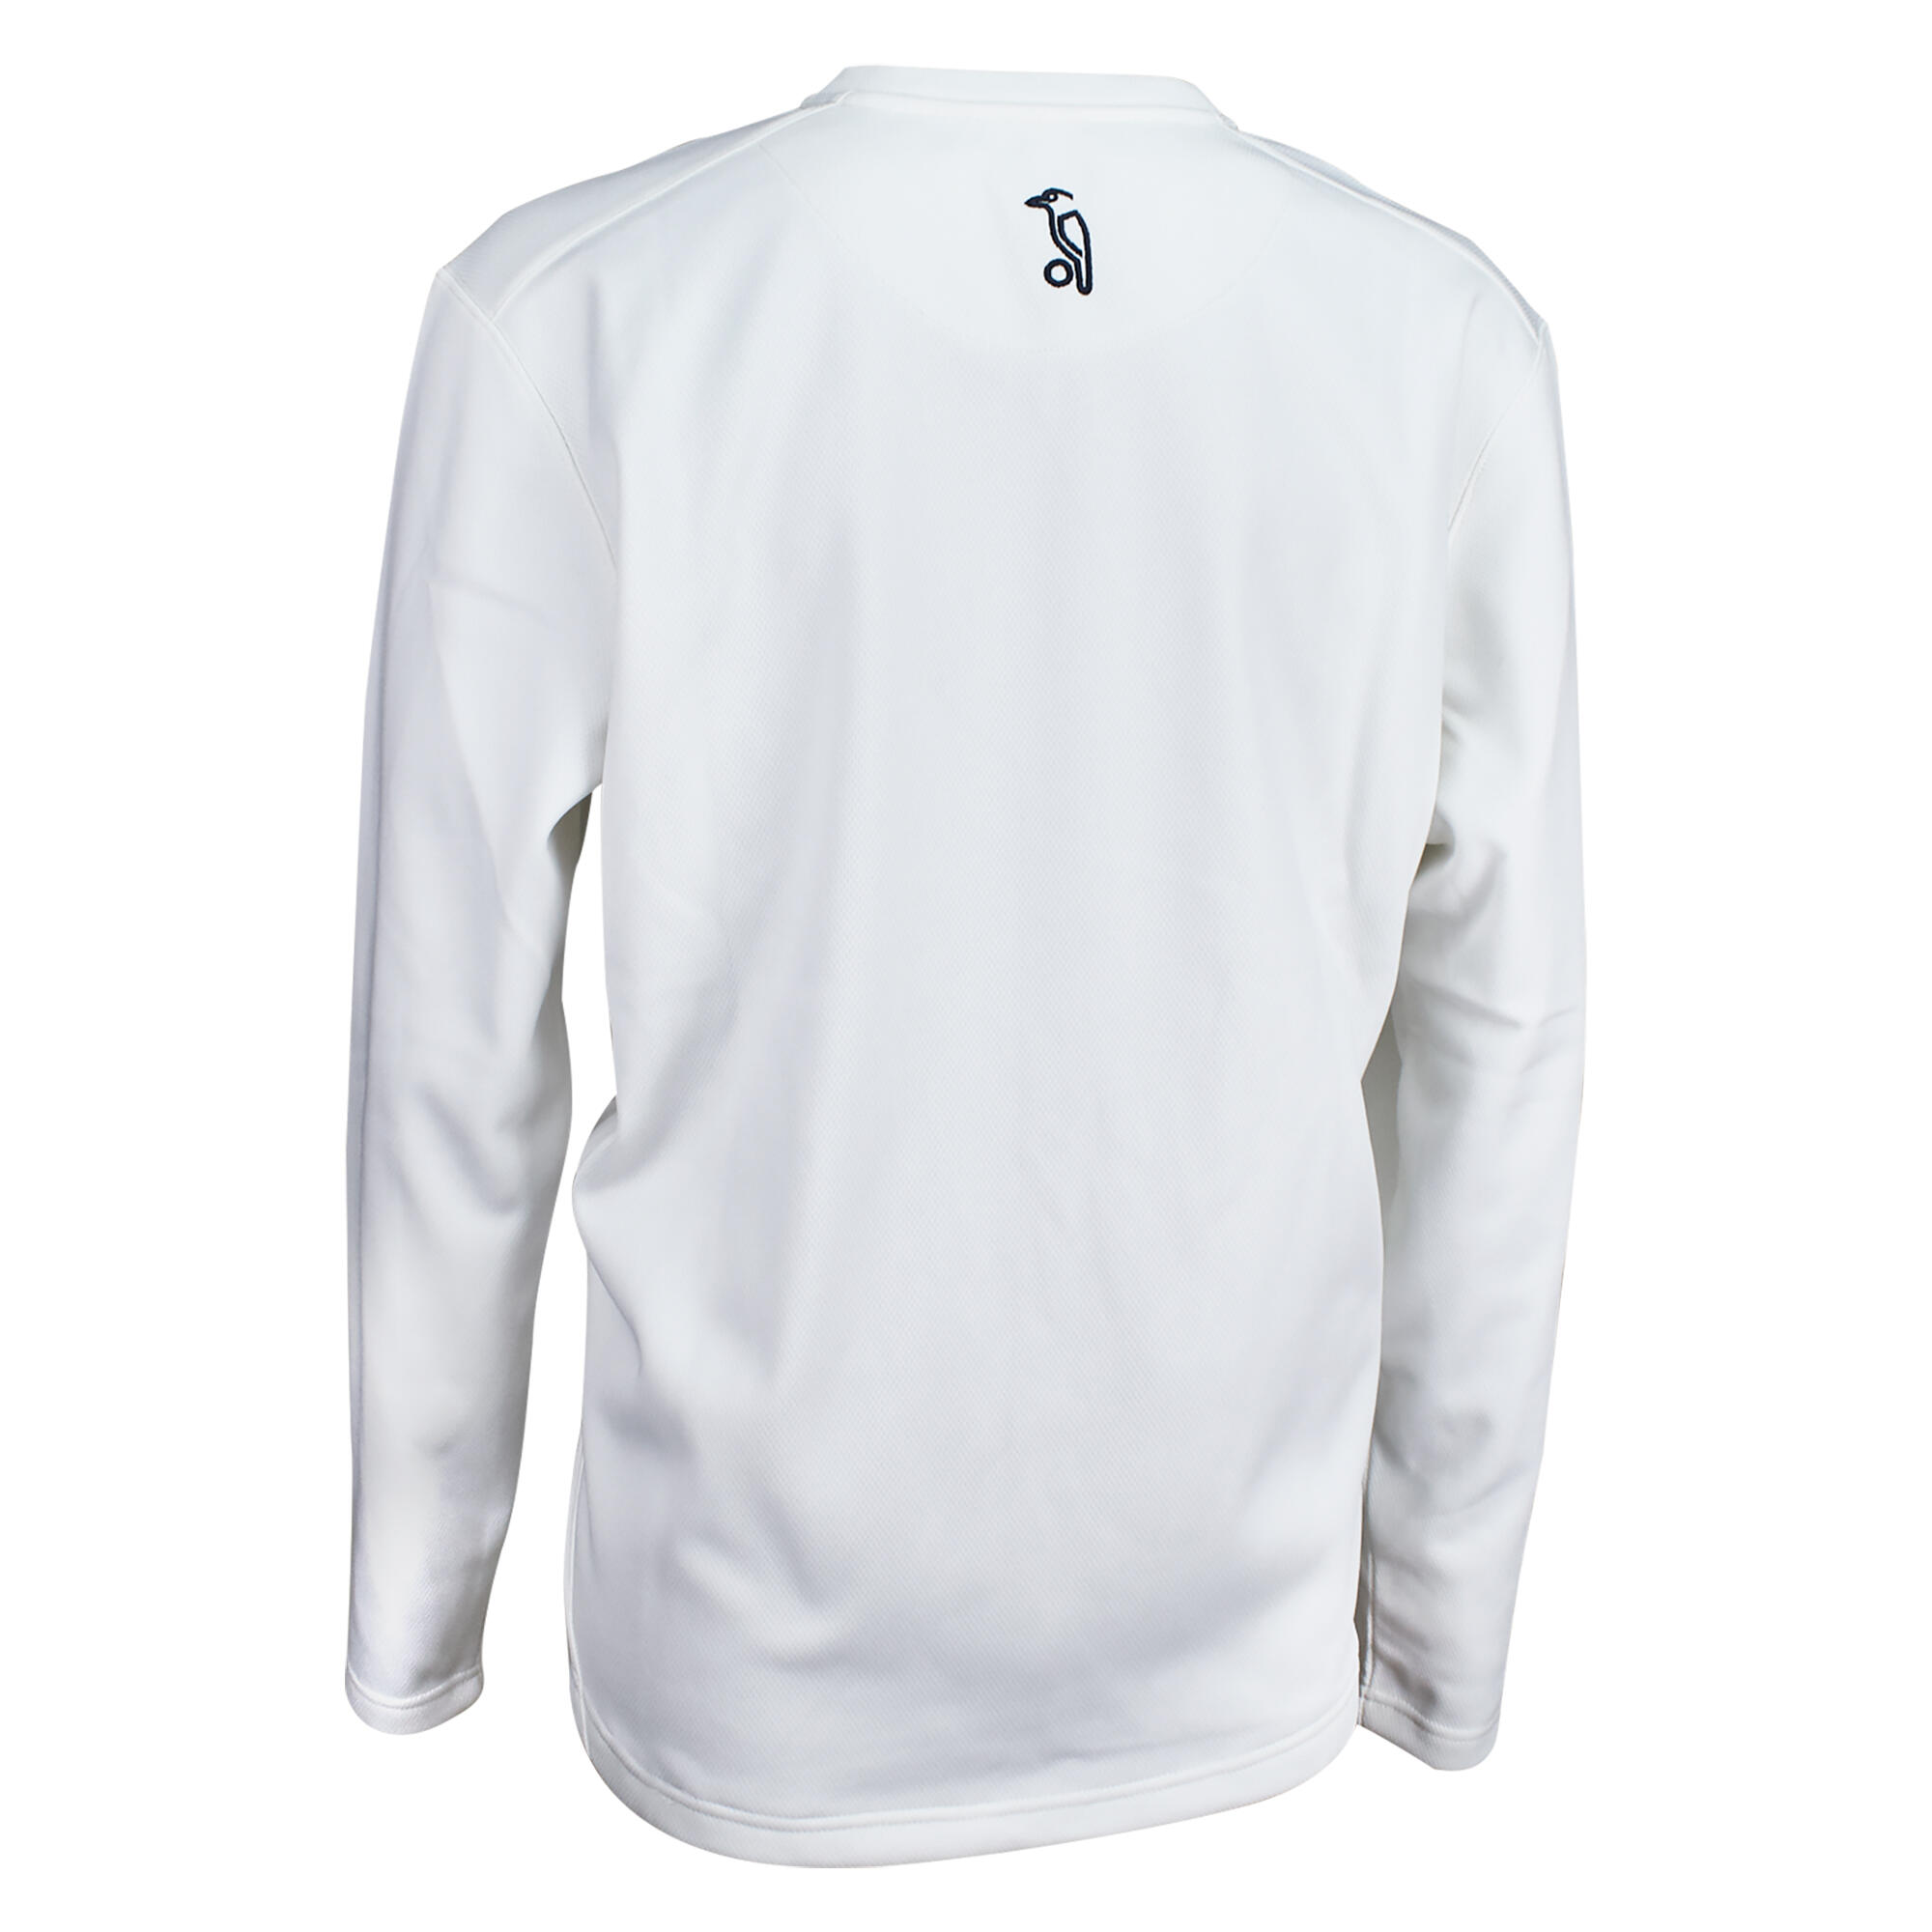 Kookaburra Junior Cricket Sweater White 2/2